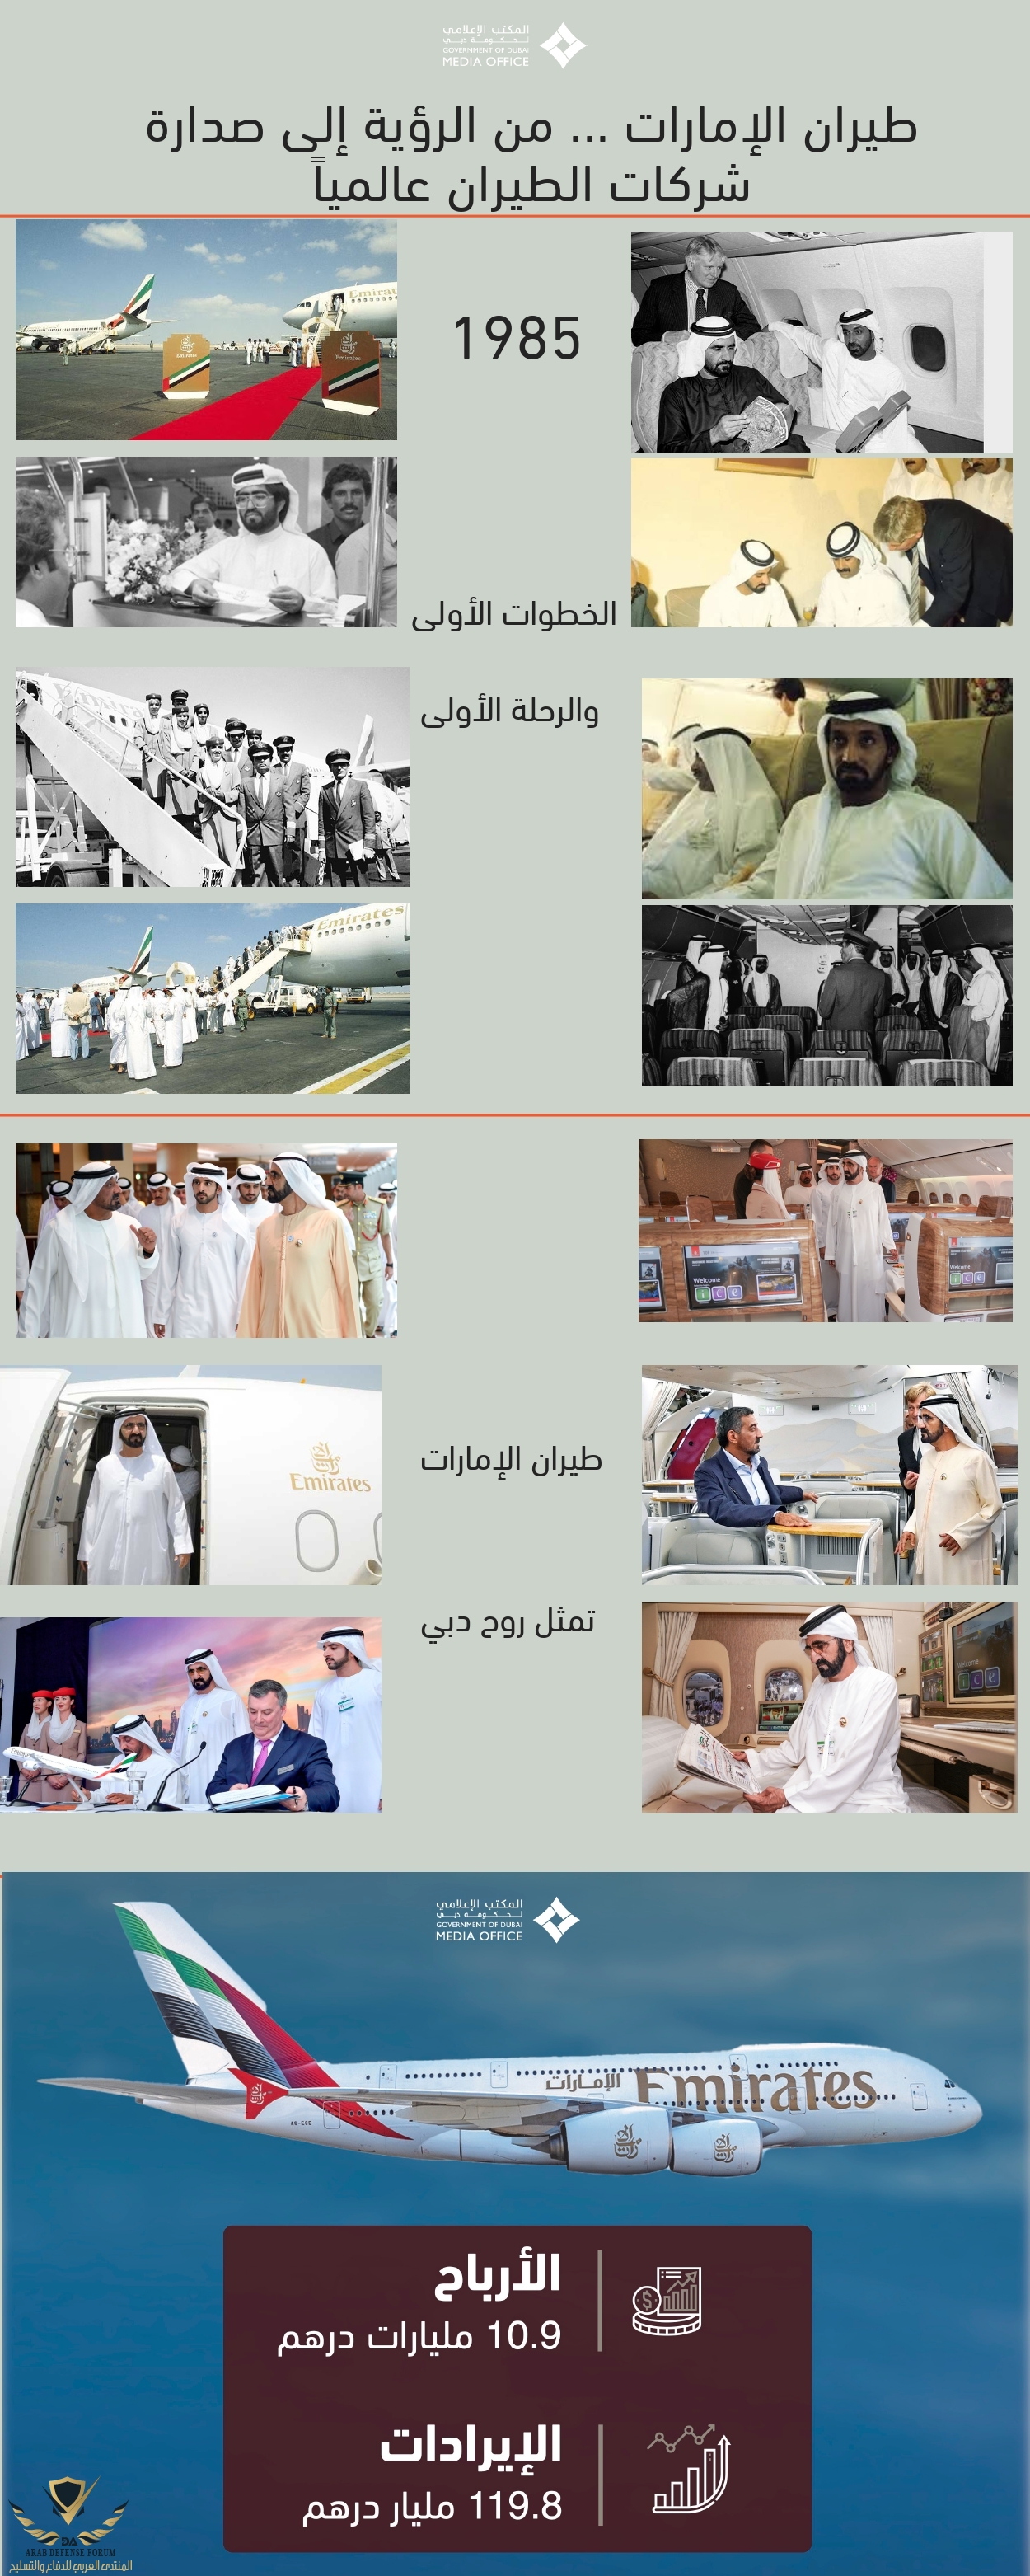 Emirates _page-0001.jpg